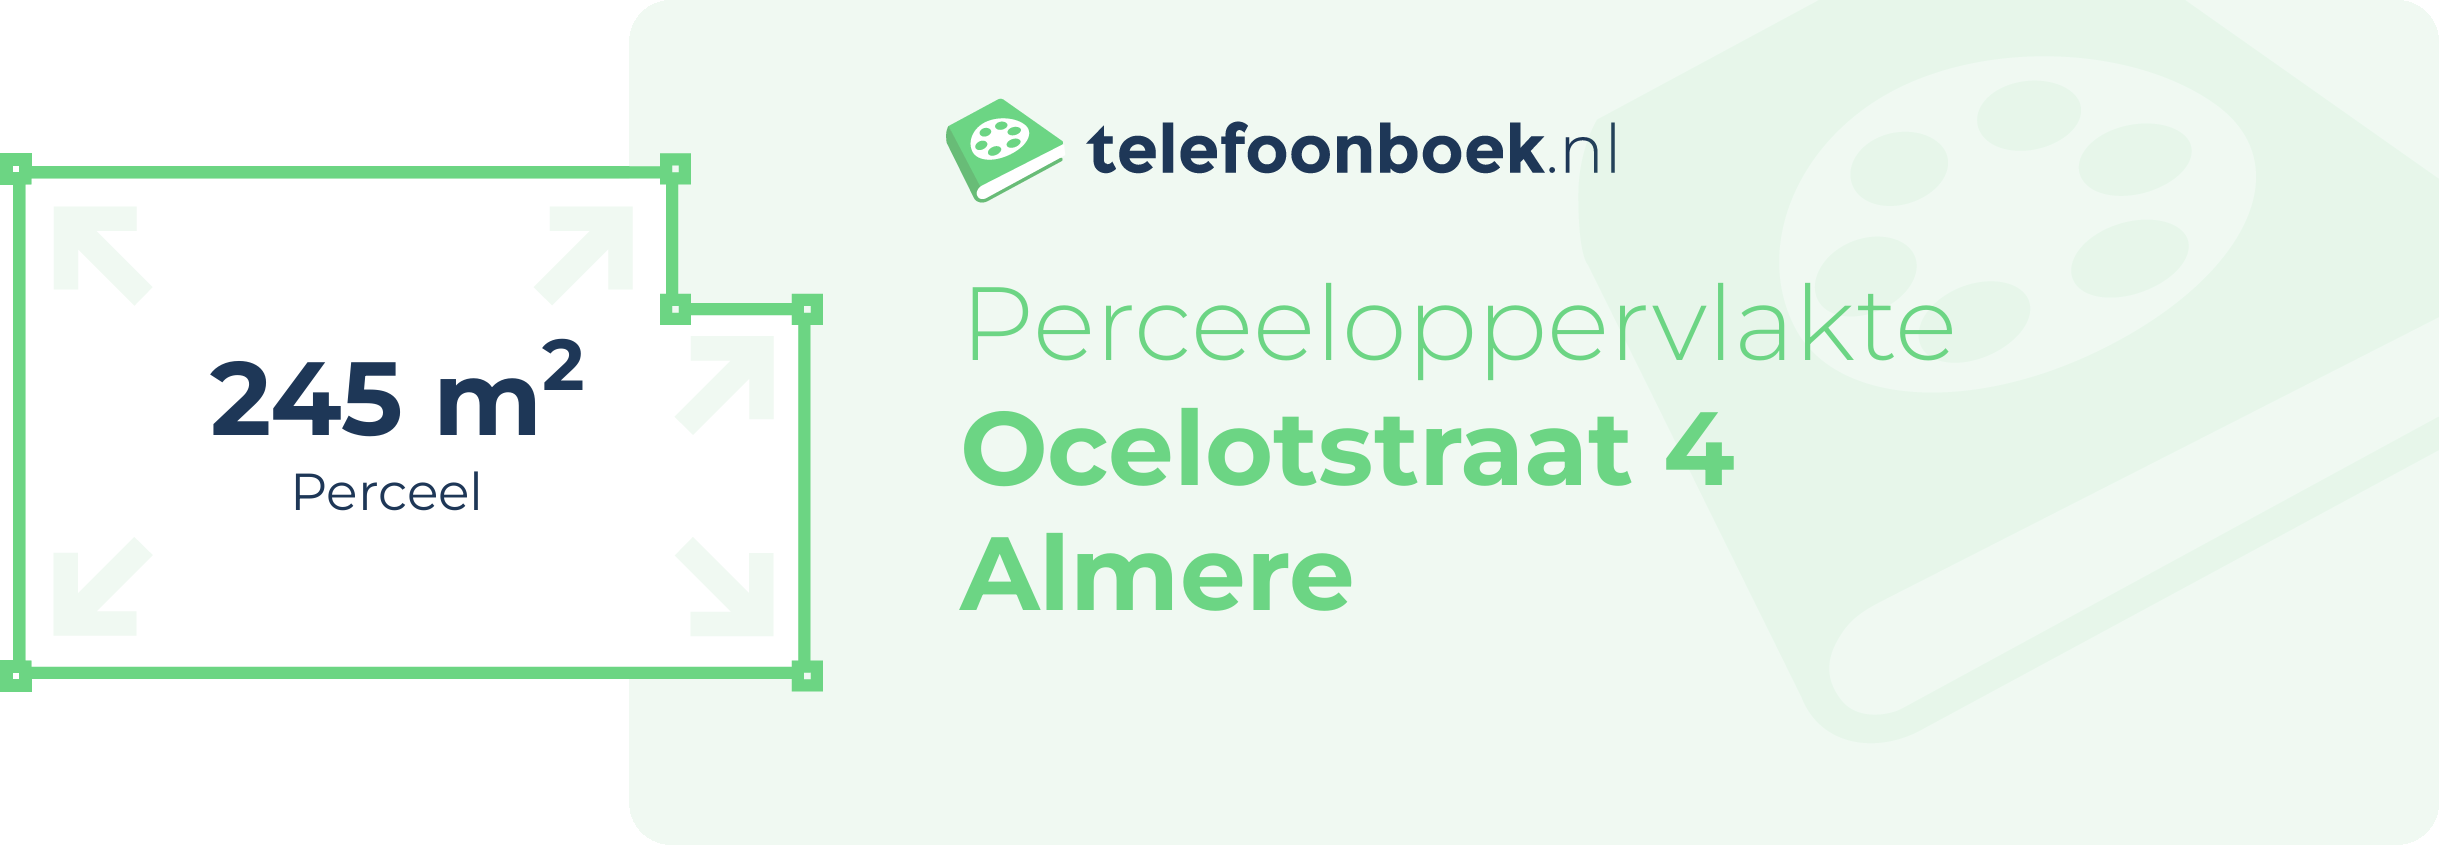 Perceeloppervlakte Ocelotstraat 4 Almere